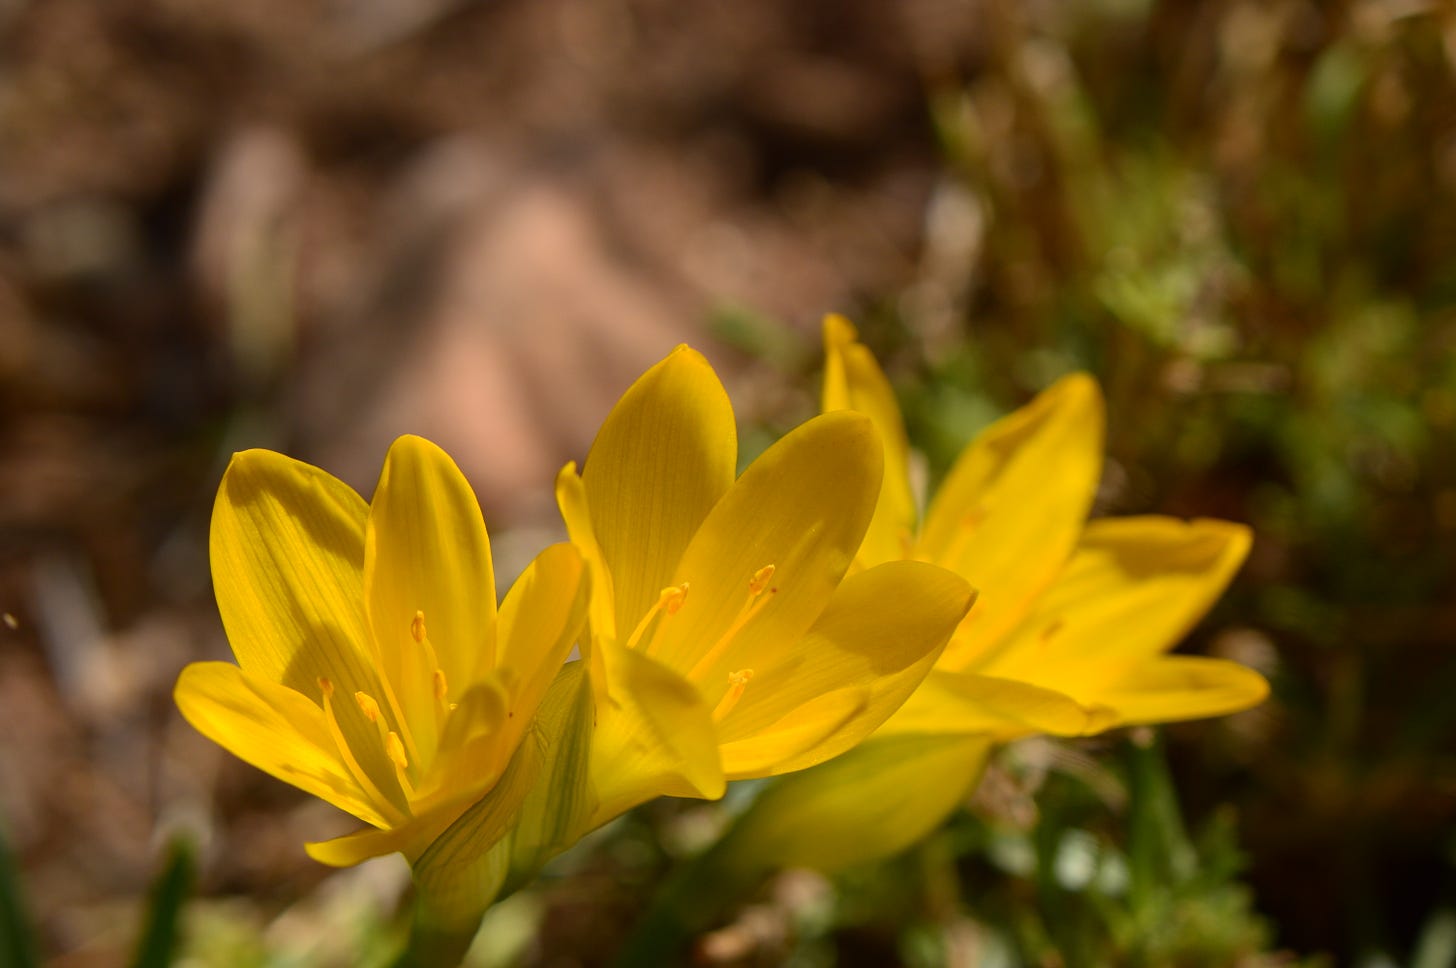 Sternbergia lutea, yellow flowers